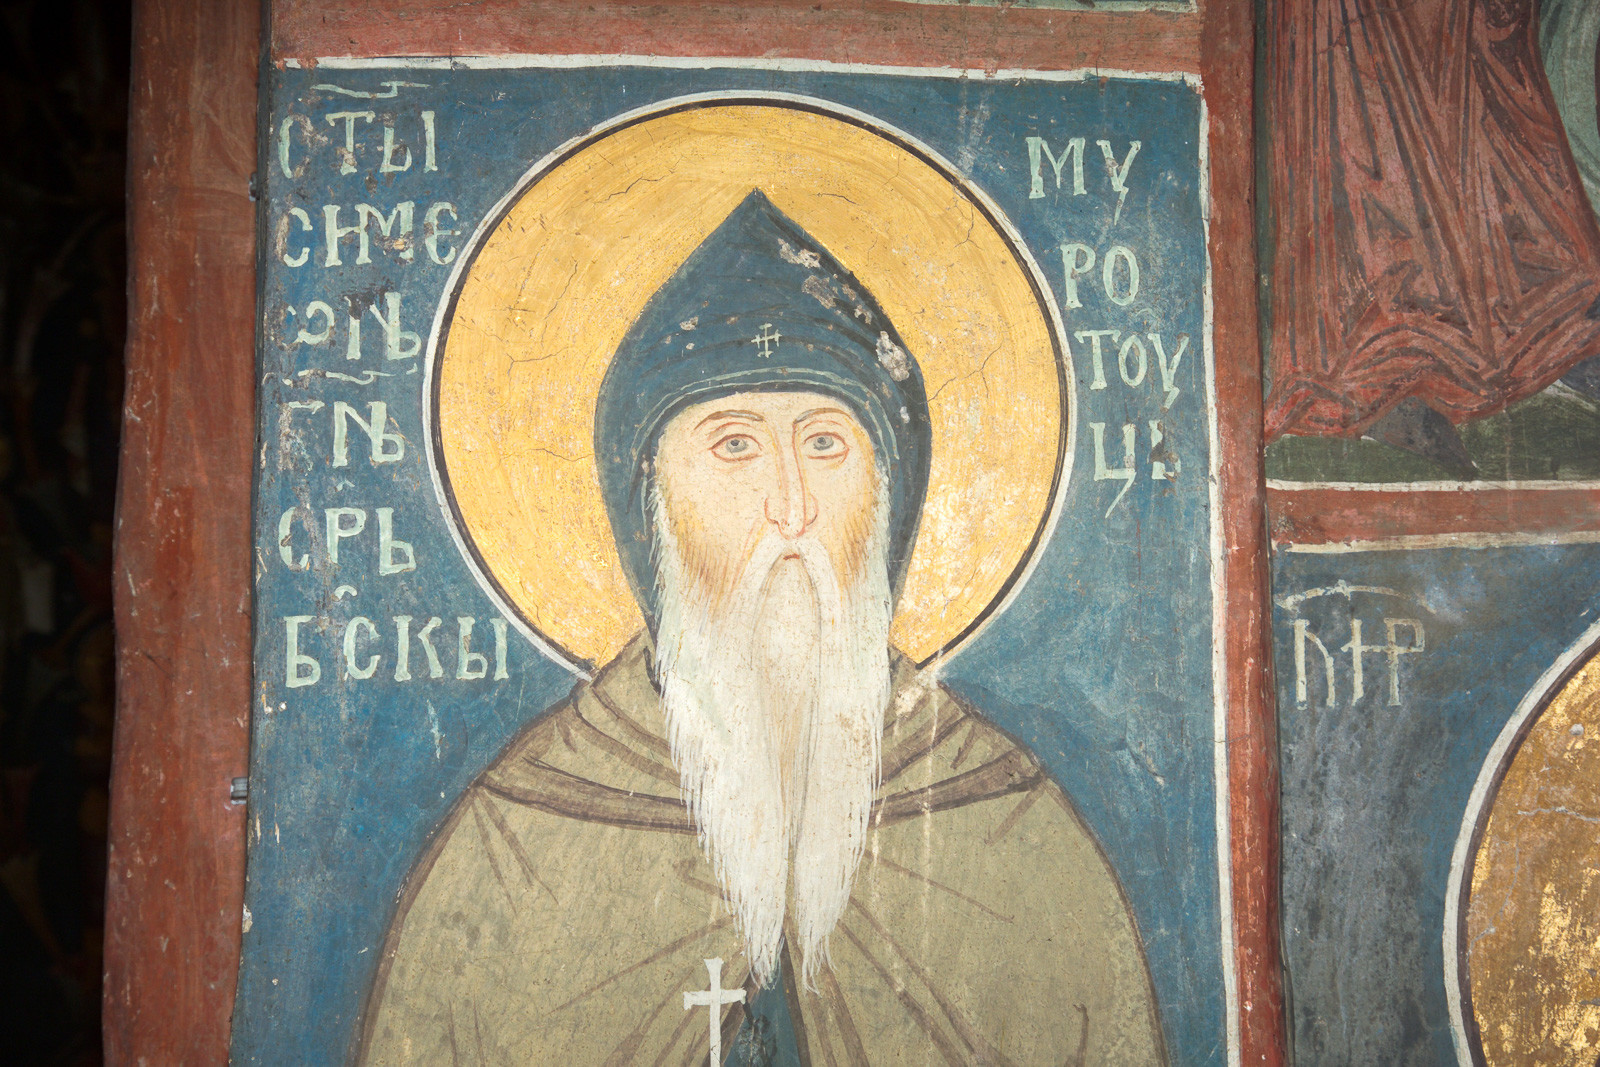 131 St. Simeon Nemanja